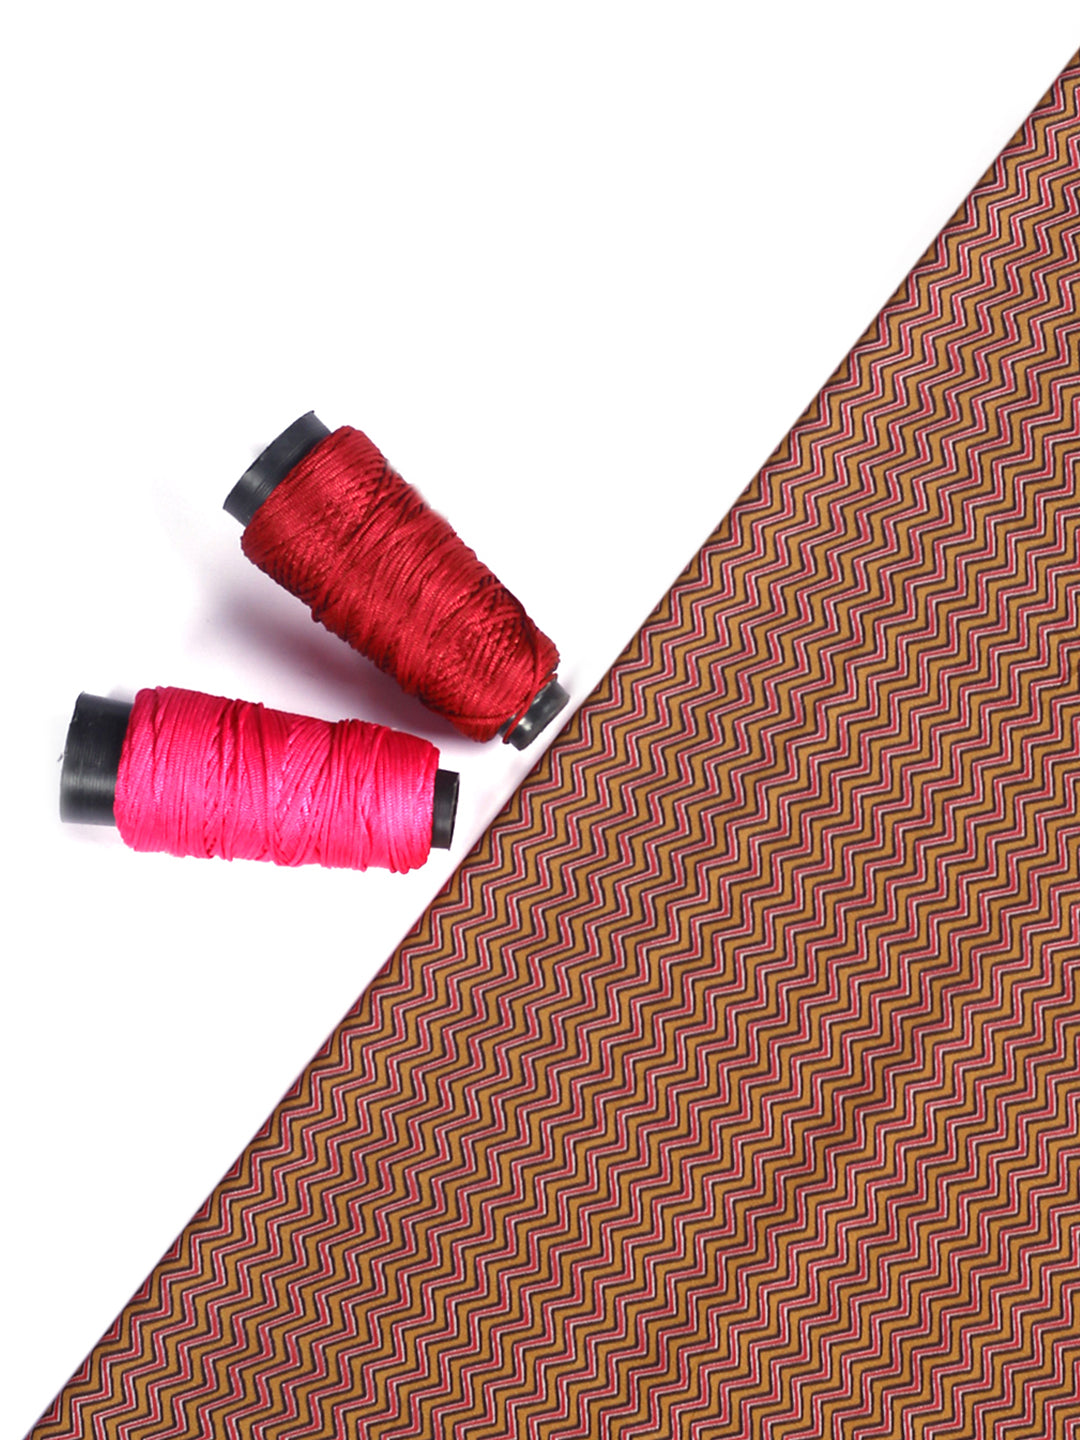 Red & Ochre Chevron Print Modal Satin Fabric